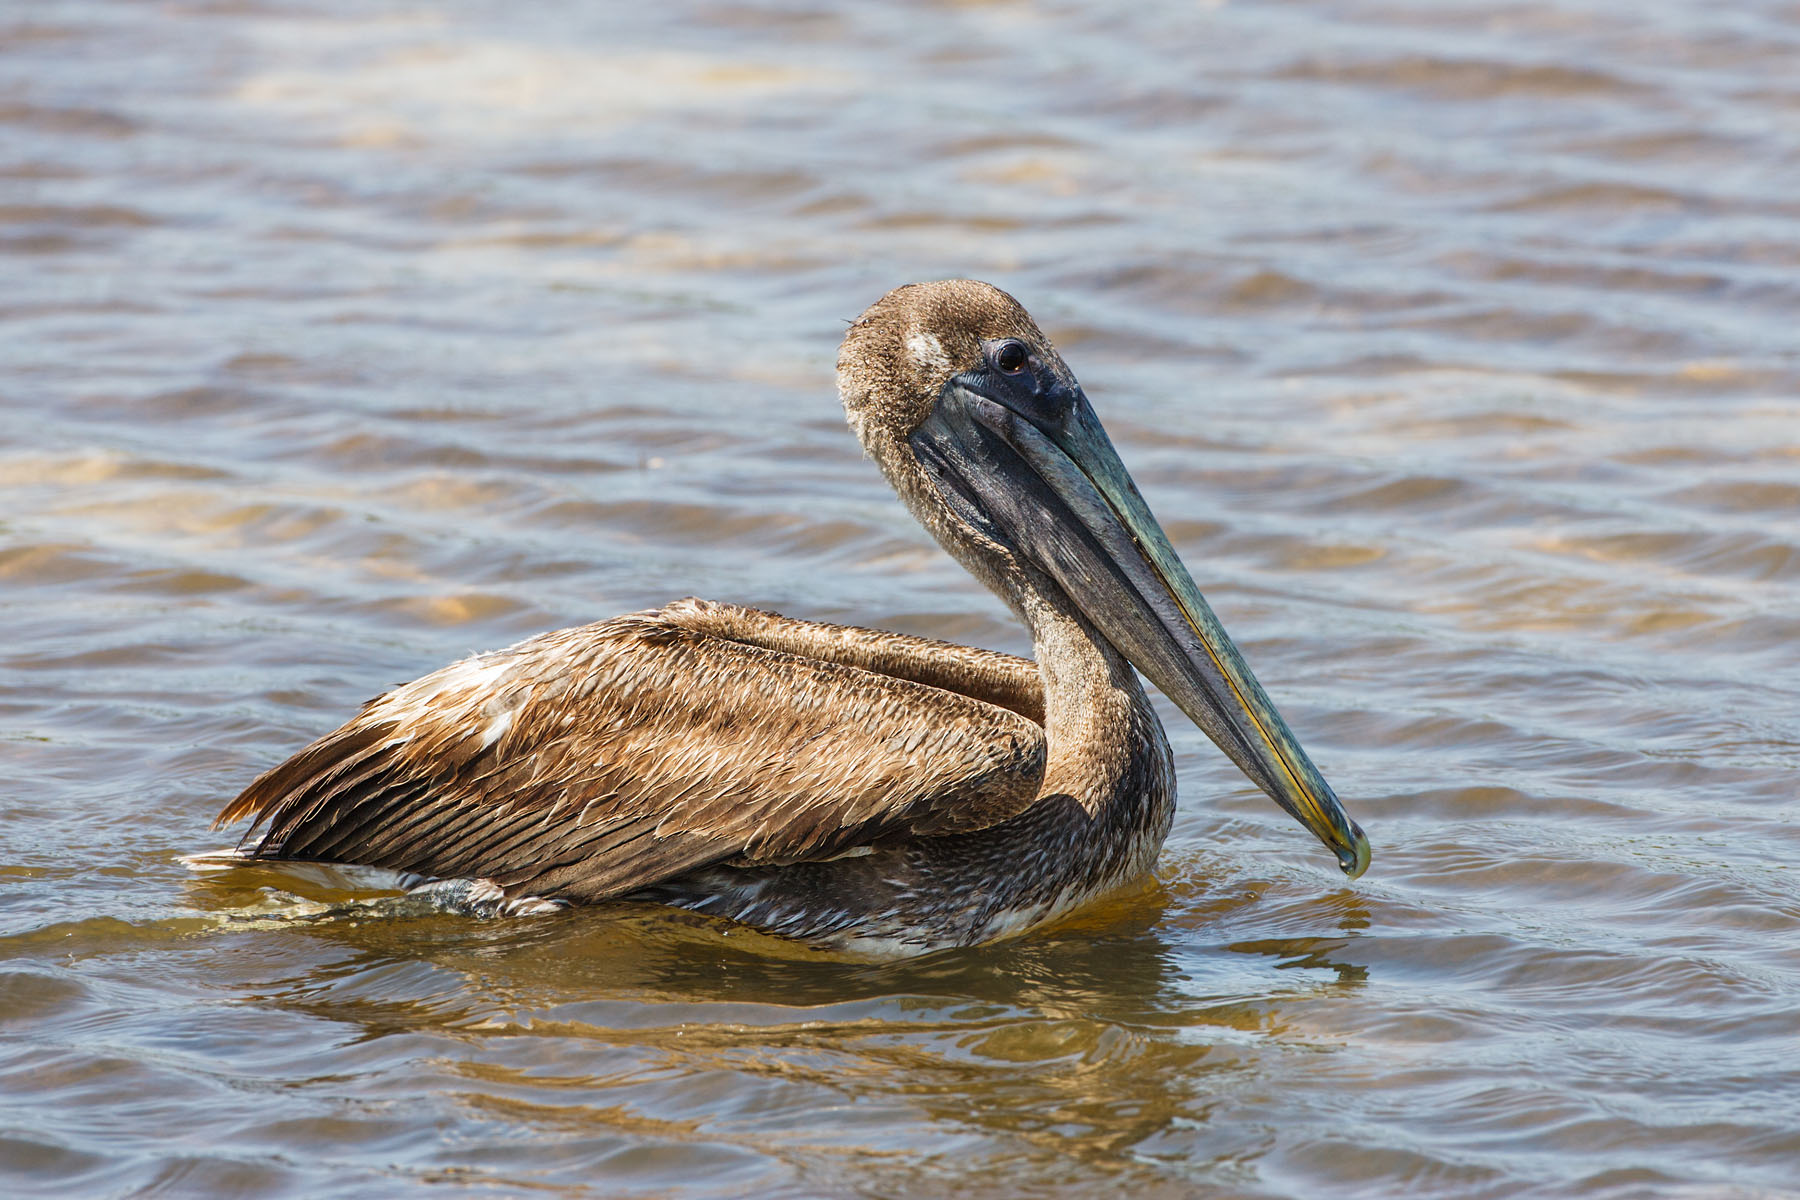 Brown Pelican, "Ding" Darling NWR, Sanibel Island, Florida.  Click for next photo.